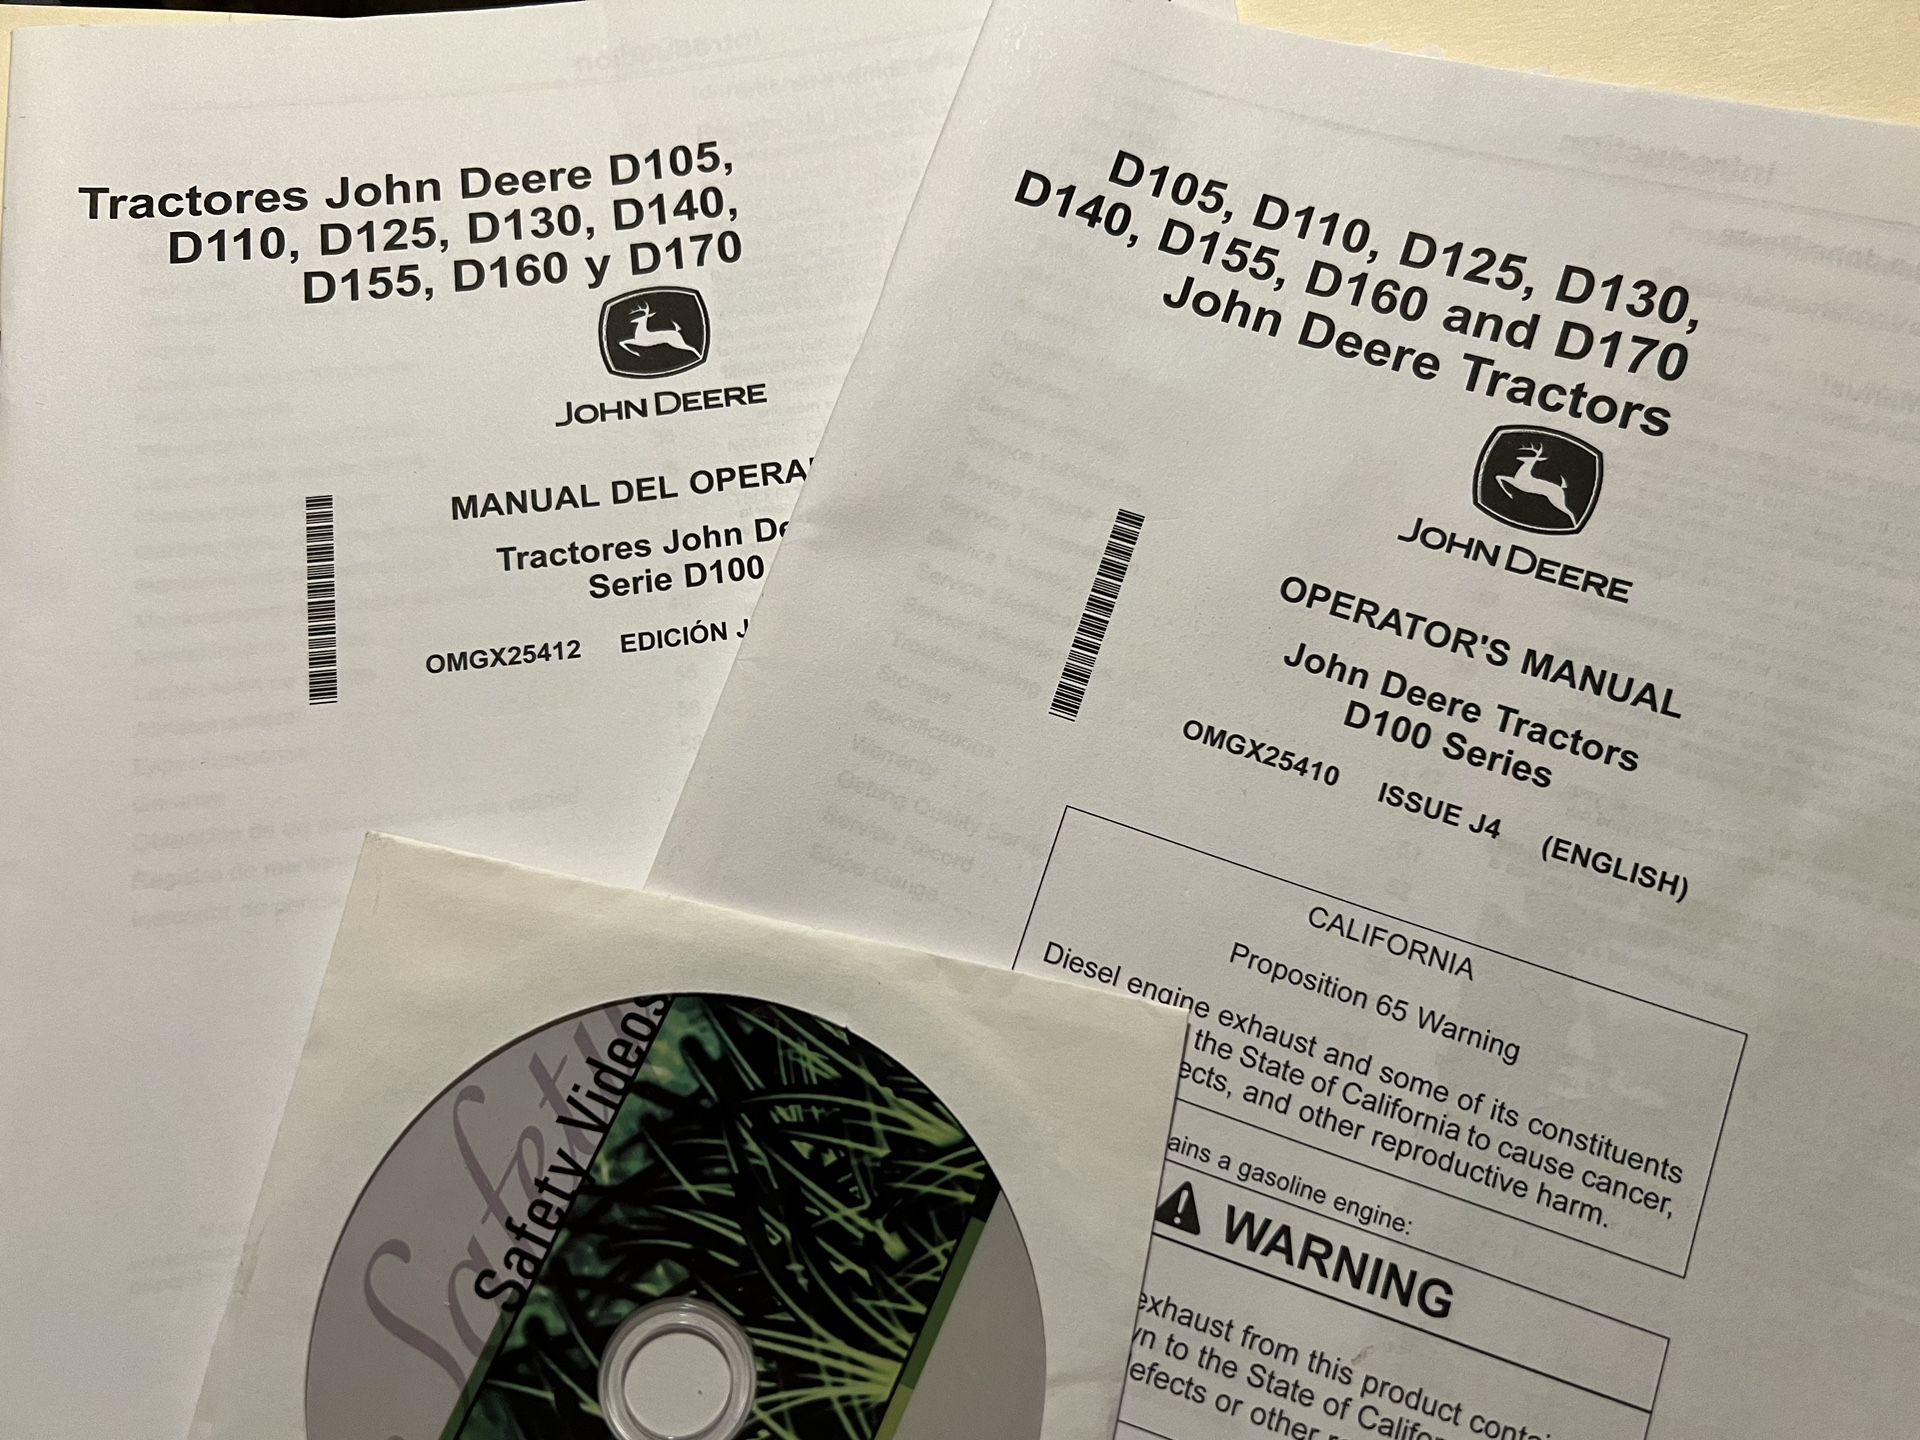 JOHN DEERE D100 Series Tractors Operator's Manual + Safety Videos DVD  D 100